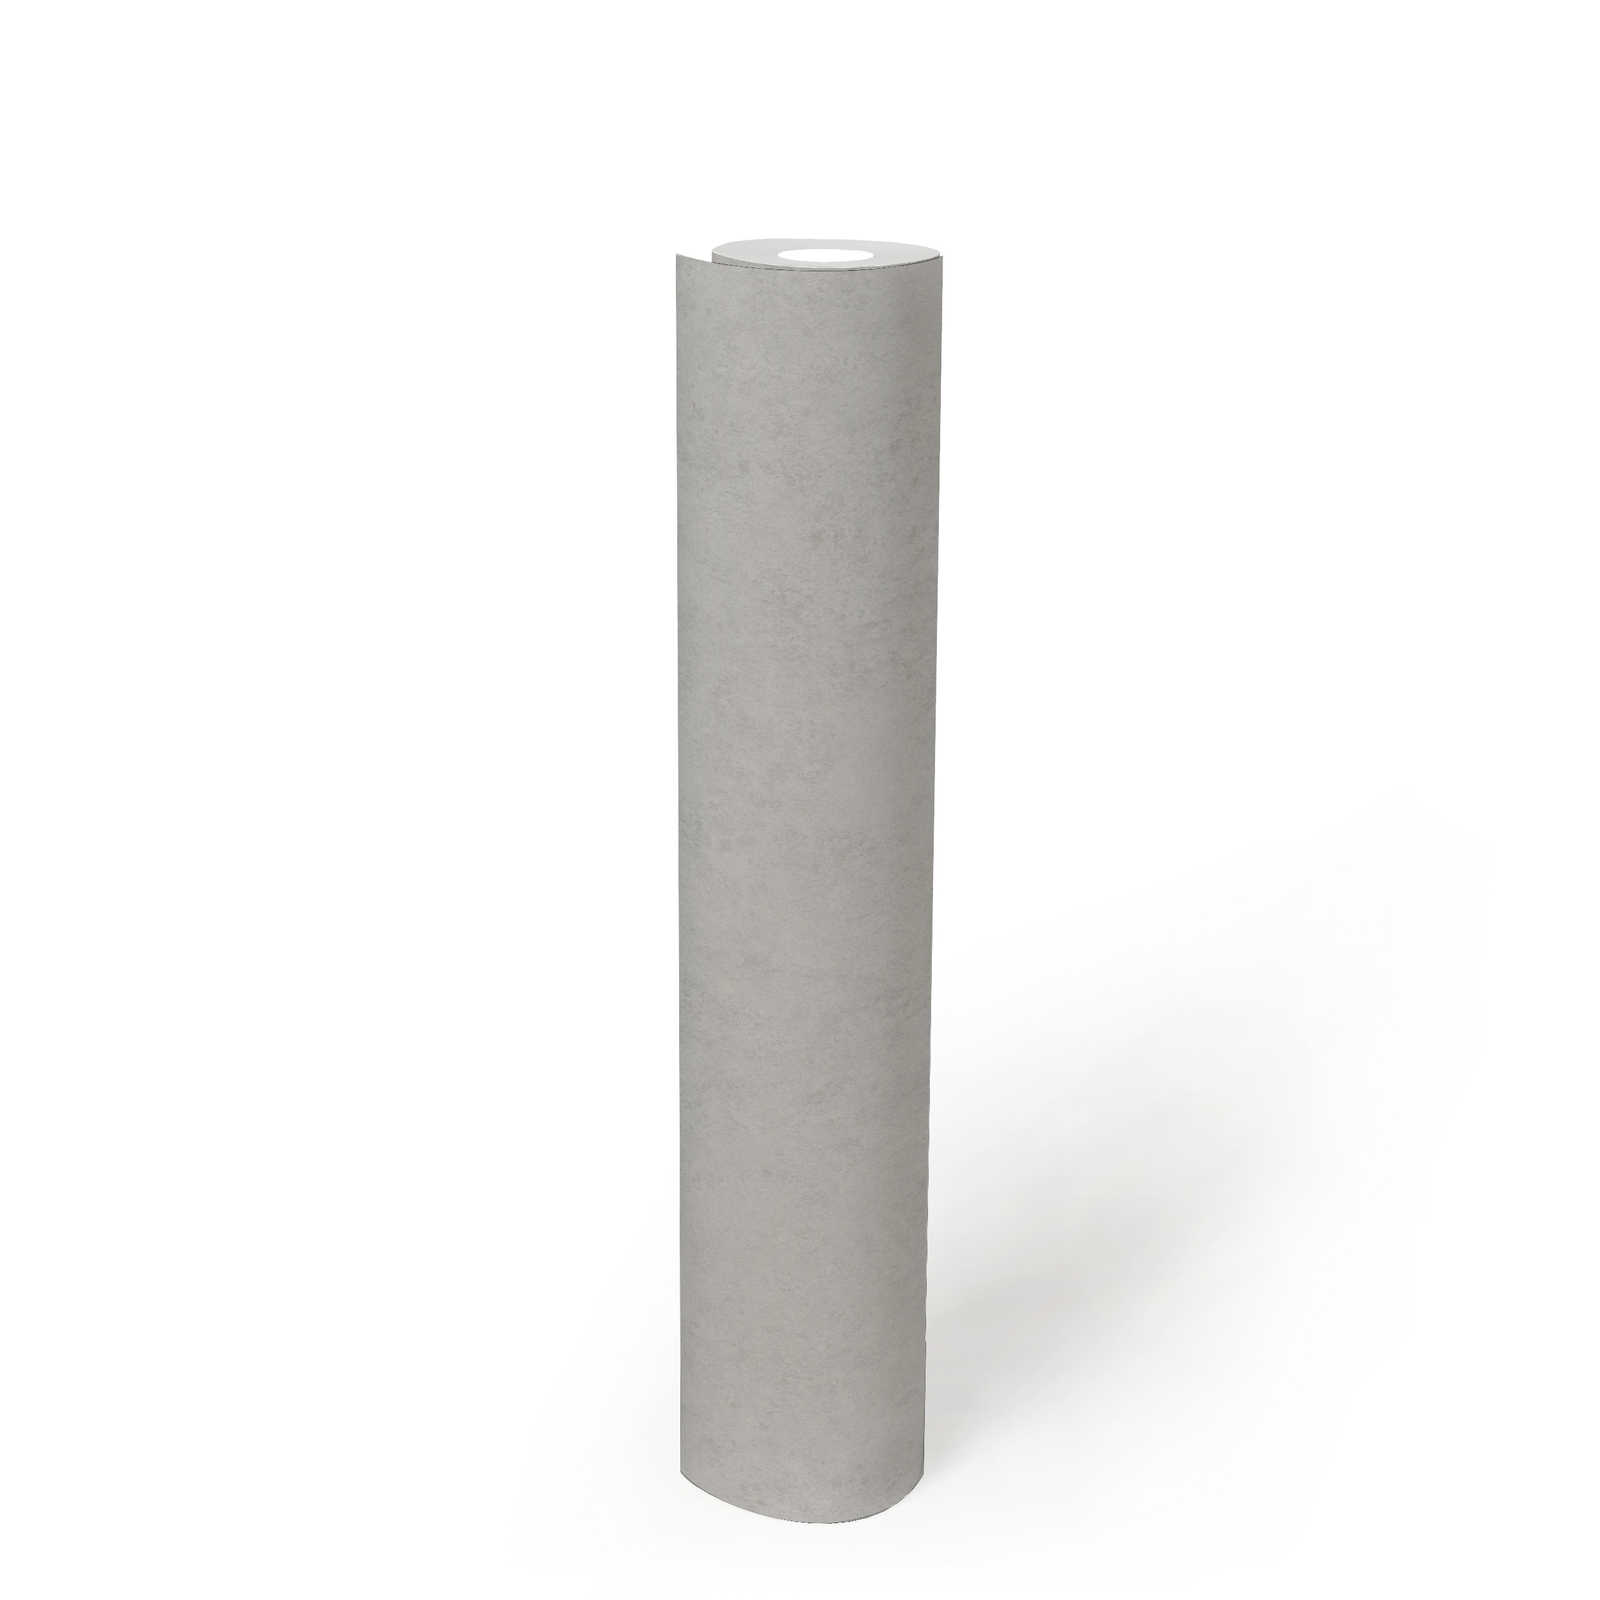             Plain wallpaper in plaster look - grey
        